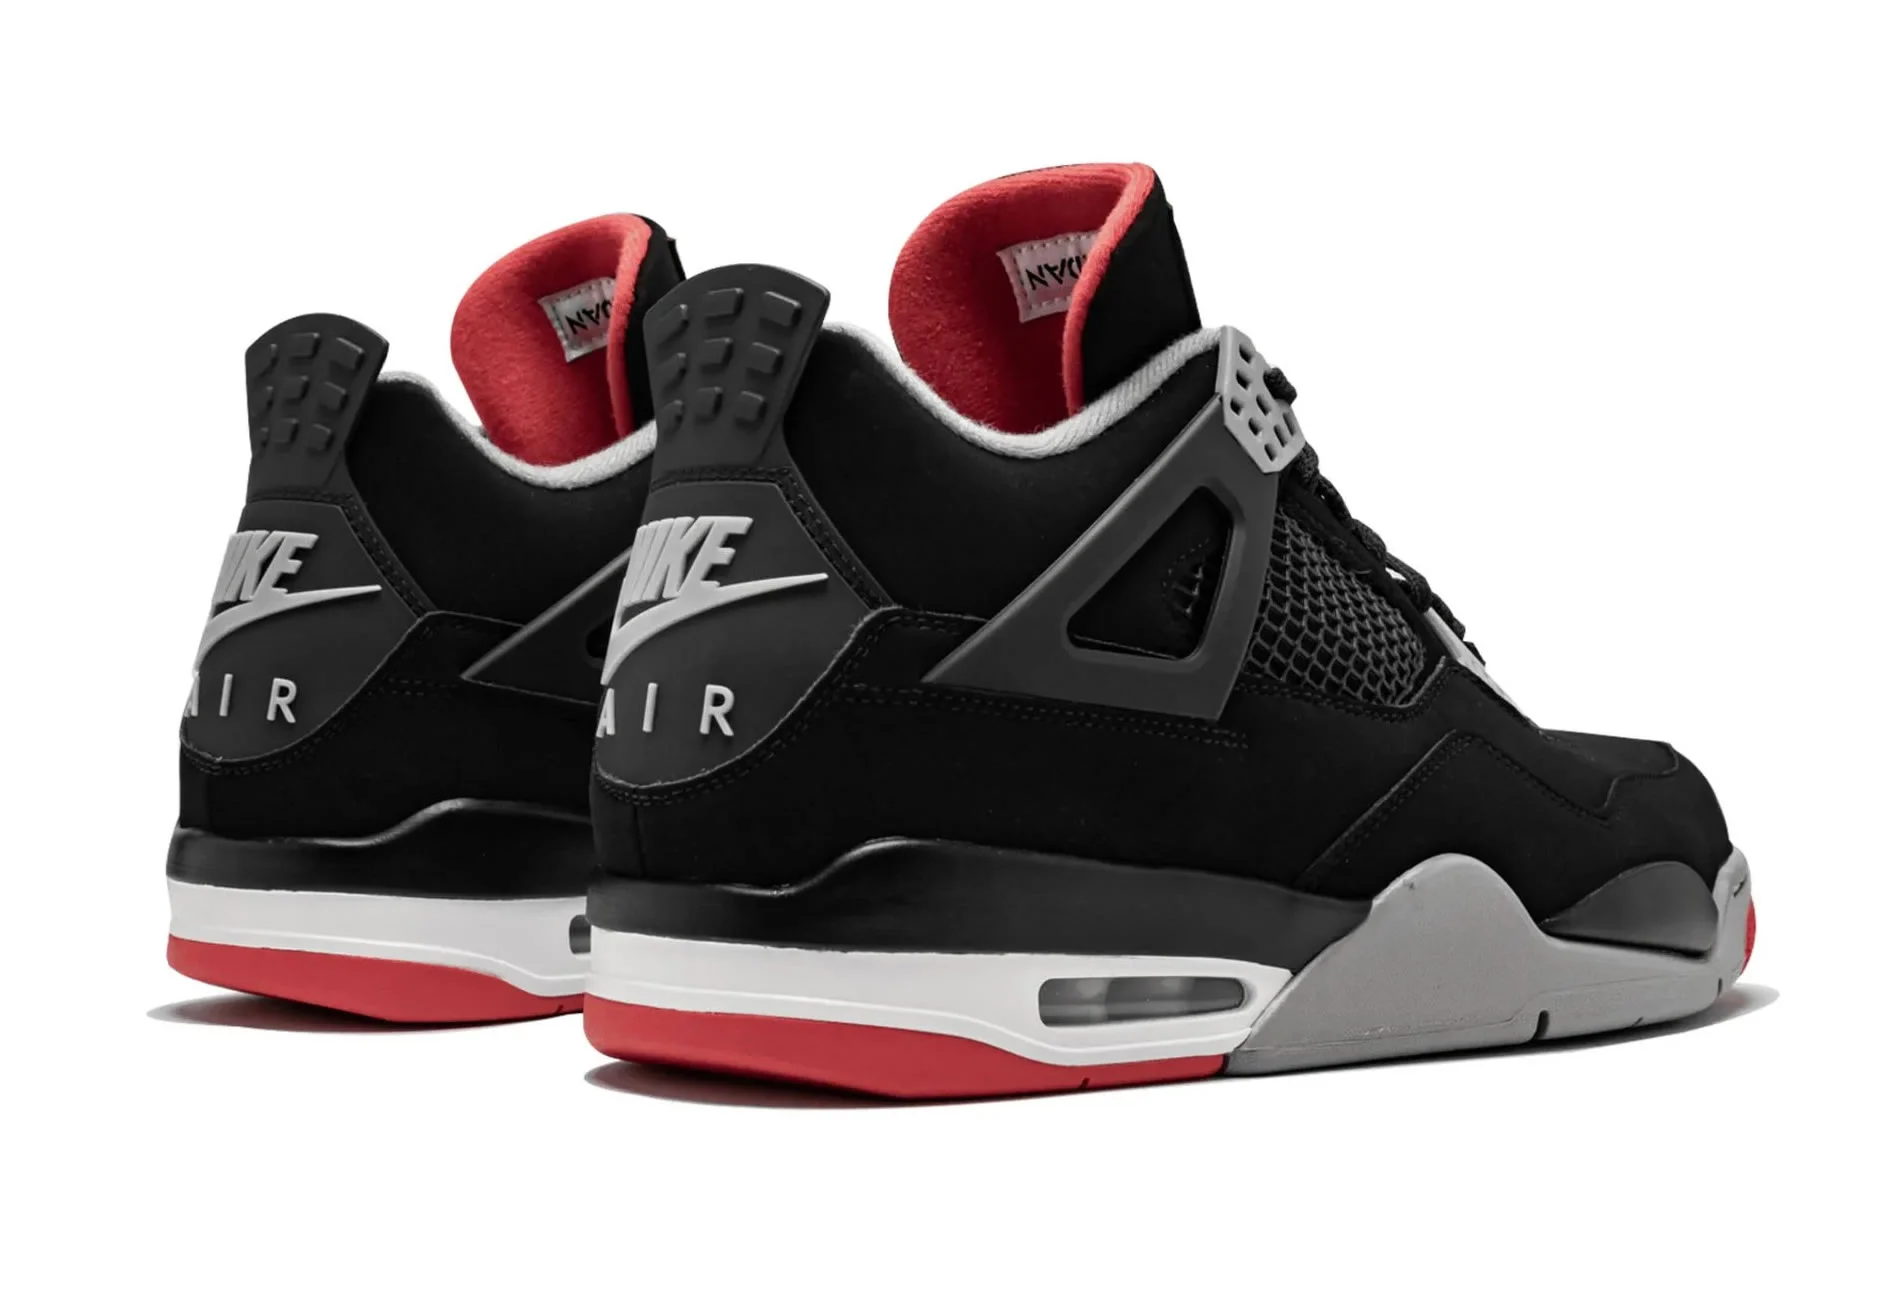 Air Jordan 4 Retro Bred 2019 308497 060 Ljr Batch Sneakers (4) - www.ljrofficial.com